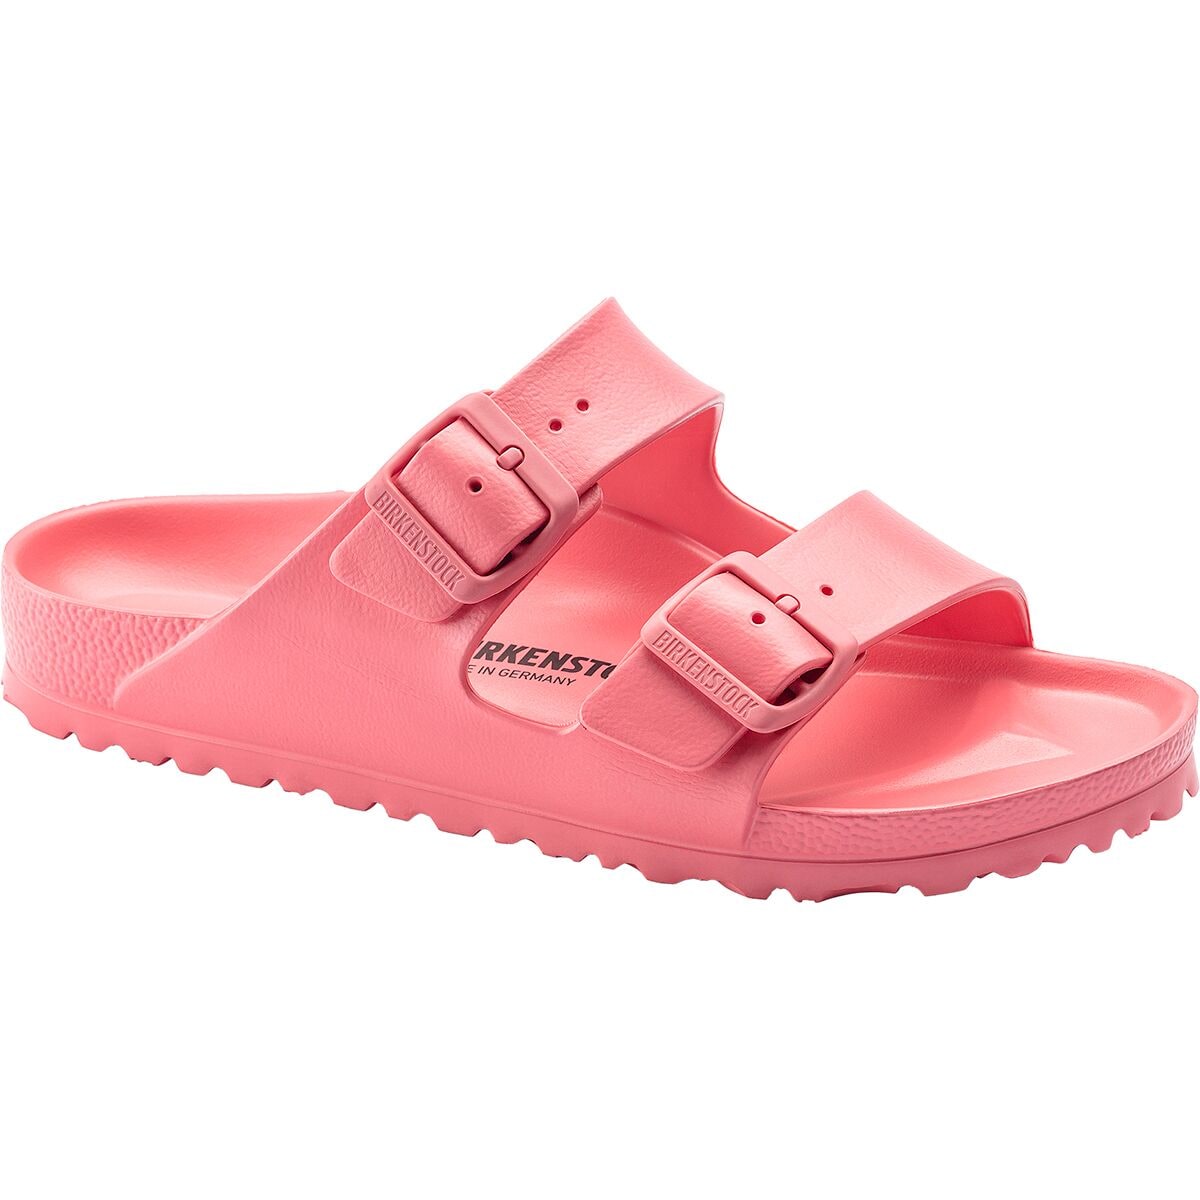 Arizona Limited Edition Narrow Sandal - Women